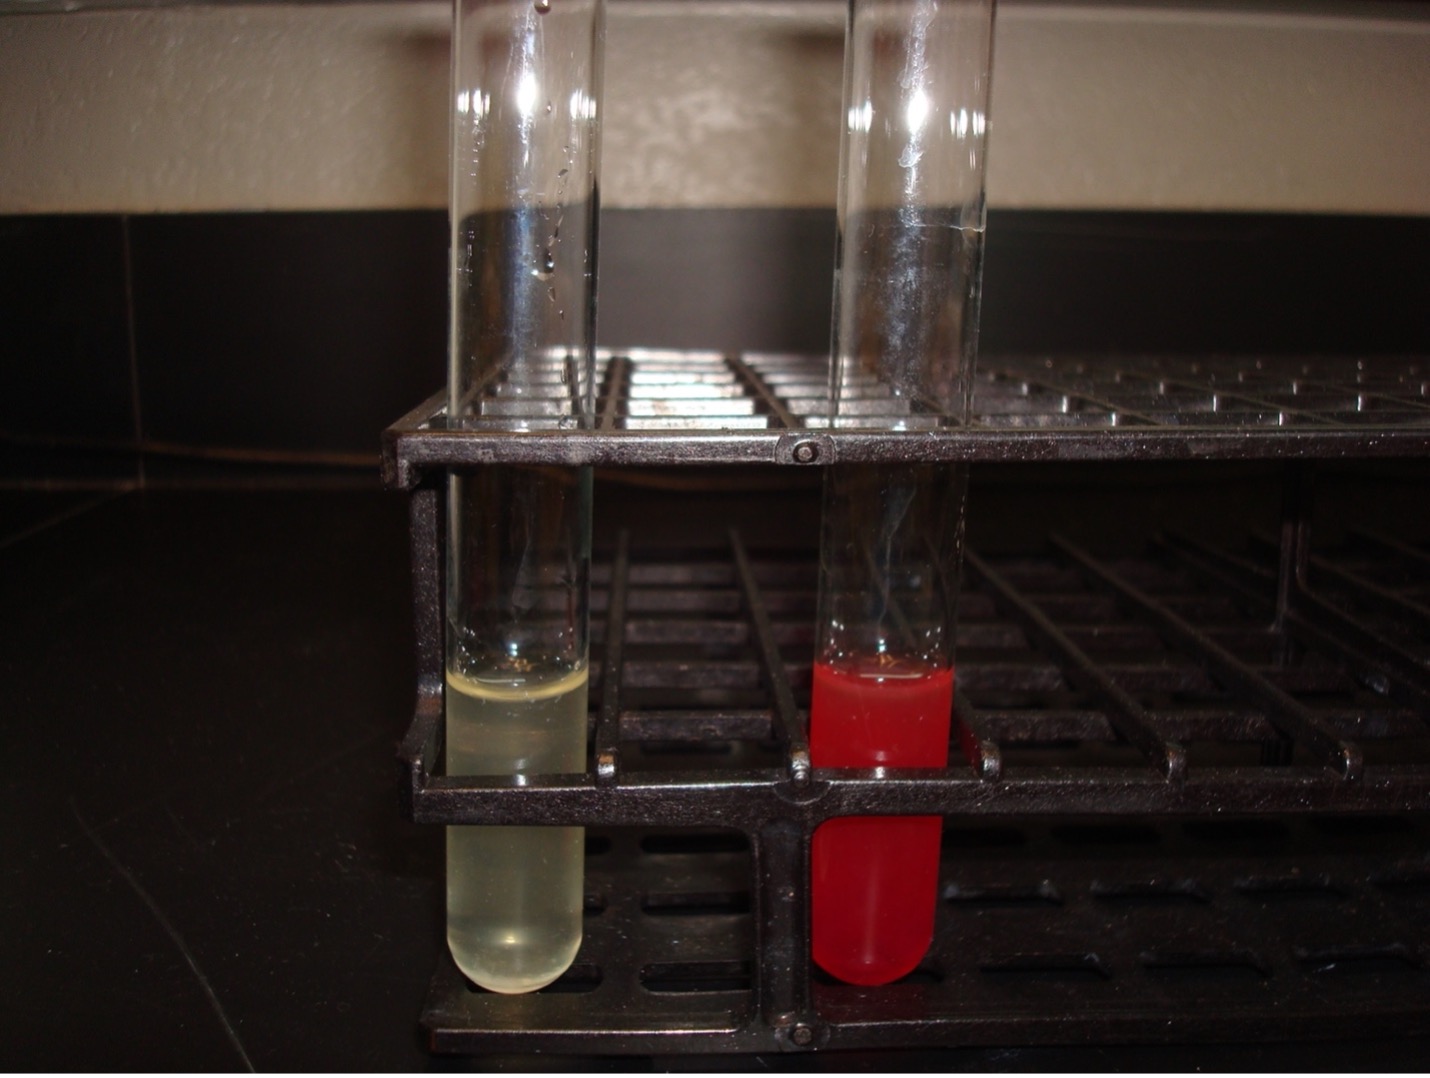 Nitrate Reduction Test After Adding Sulfanilic Acid and Alpha-Naphthylamine